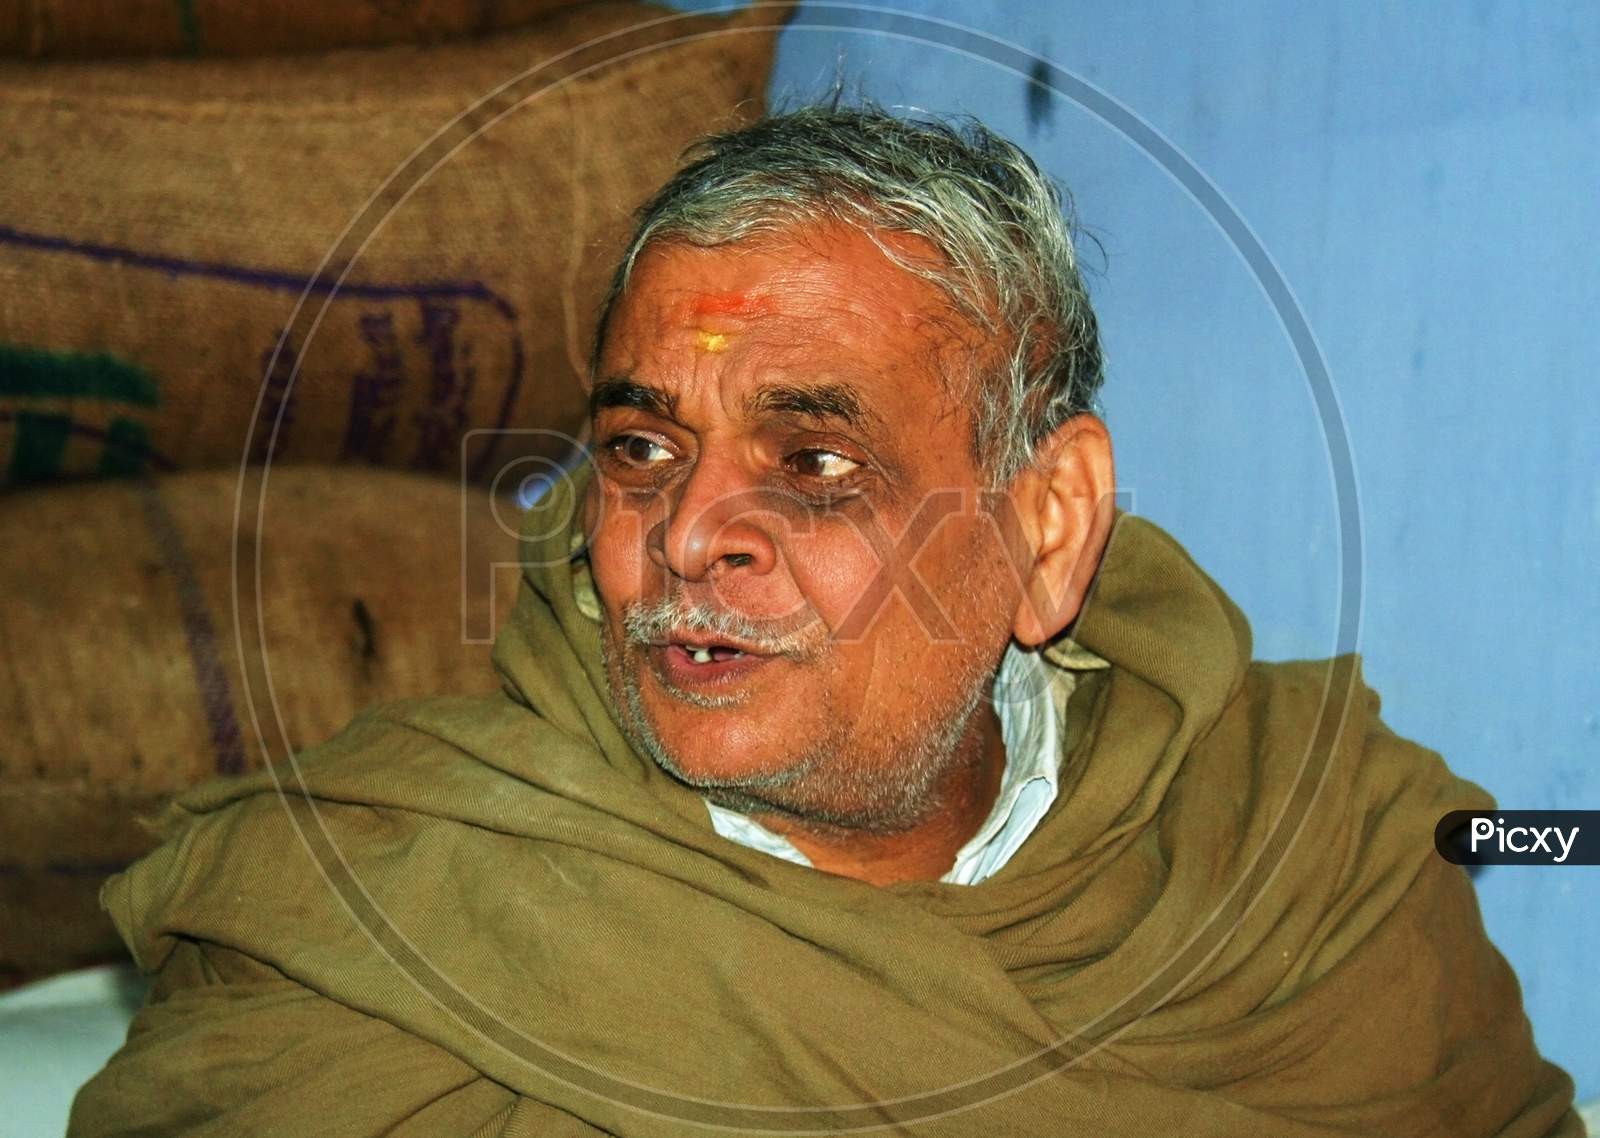 Aged Indian man portrait, sitting at shop in Jaipur.